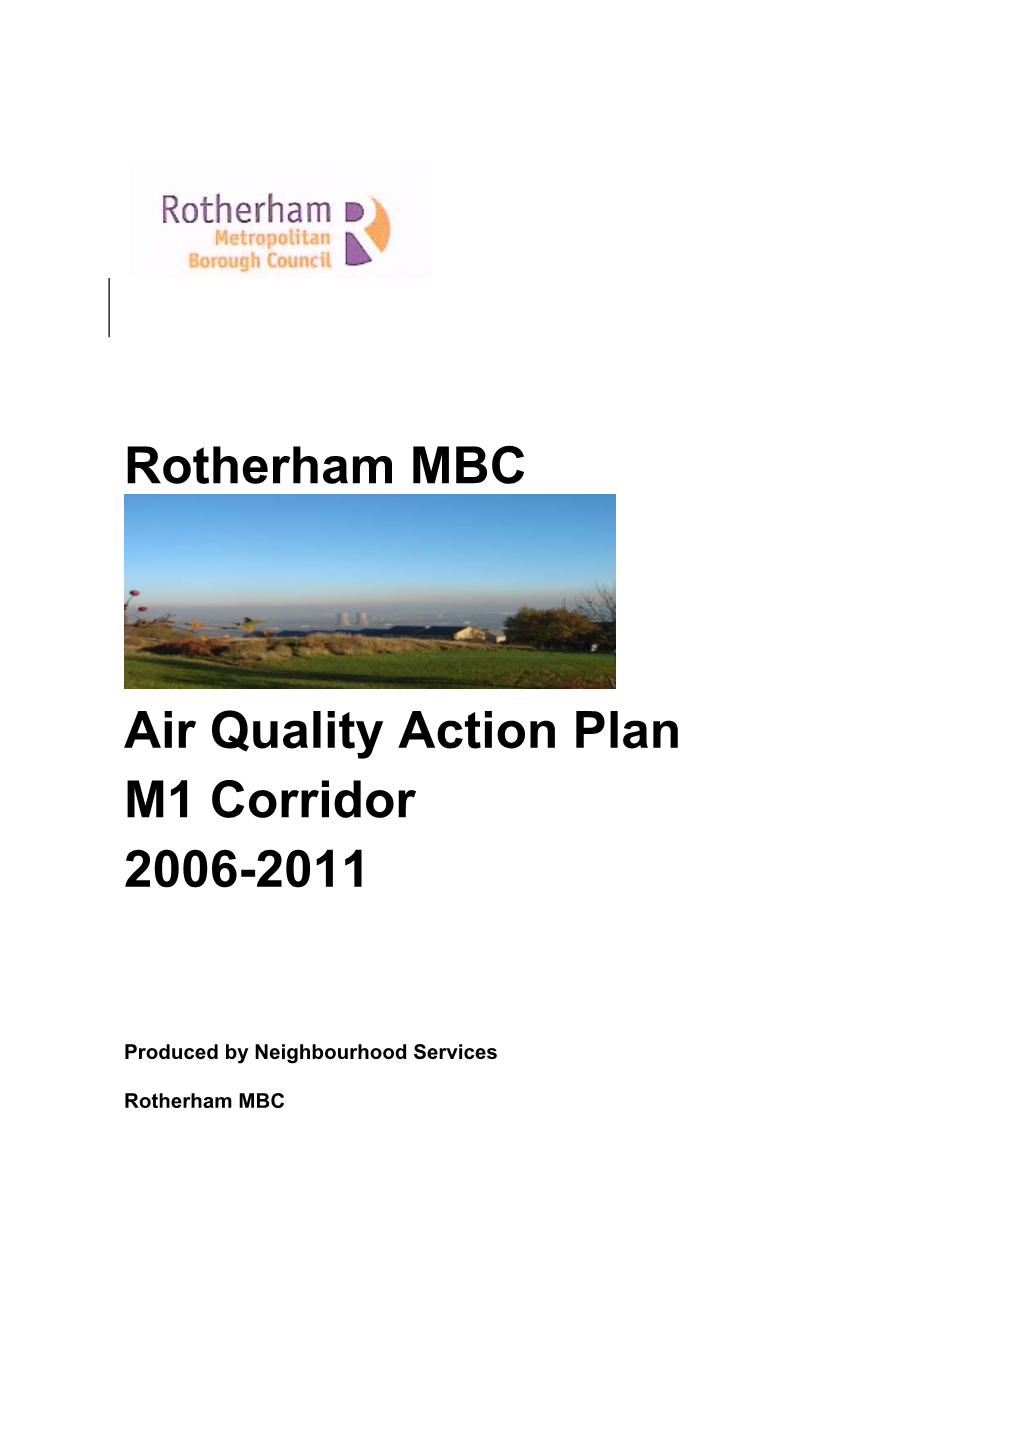 Air Quality Action Plan M1 Corridor 2006-2011